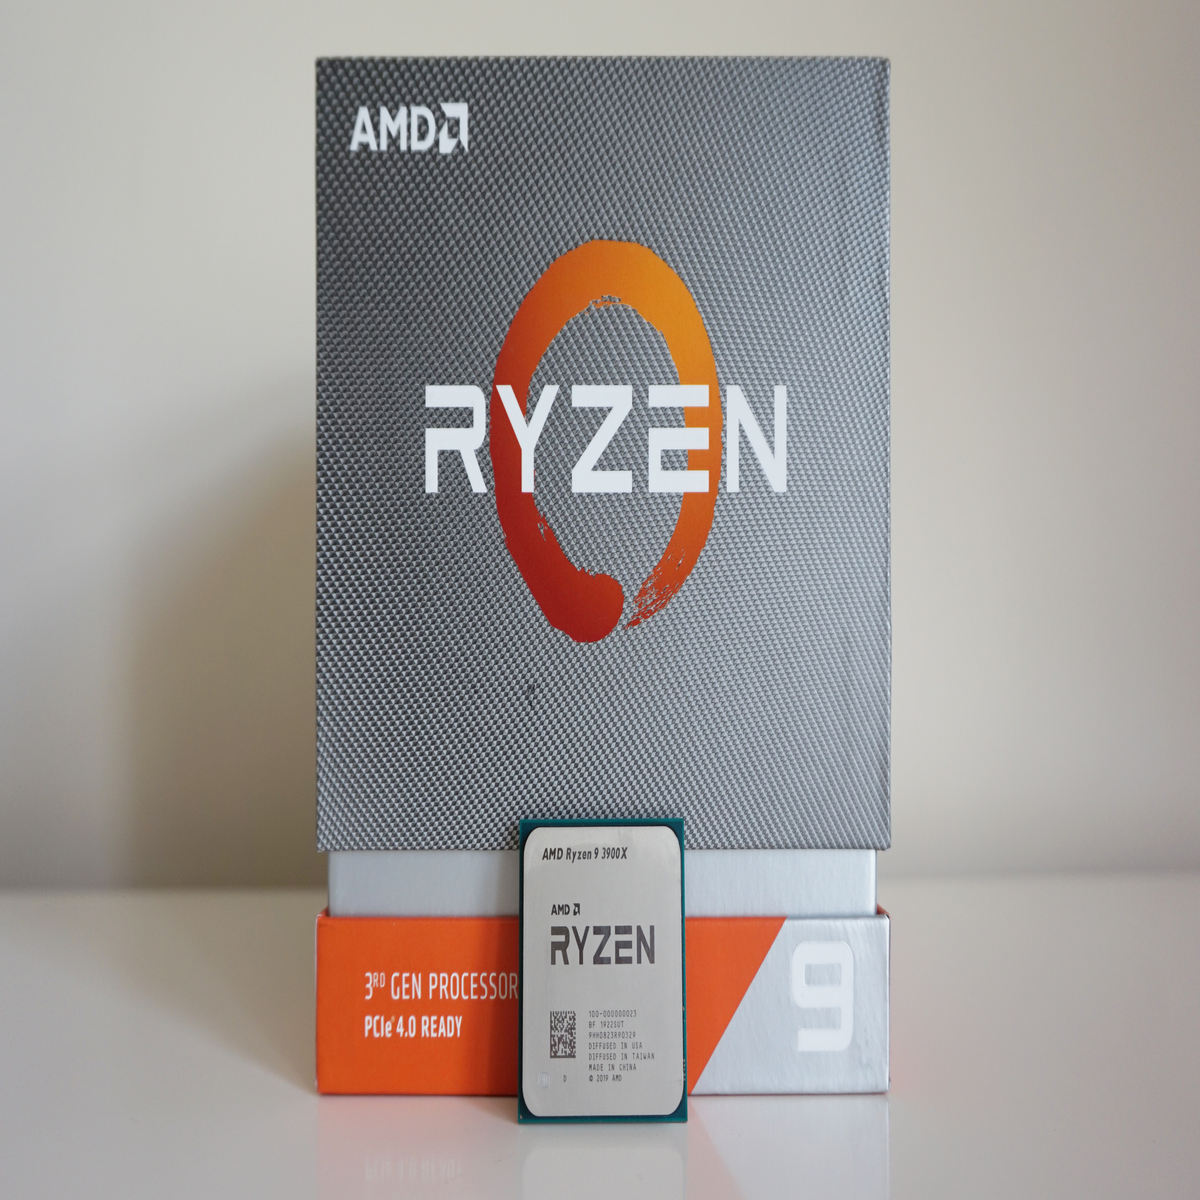 AMD Ryzen 9 3900X review